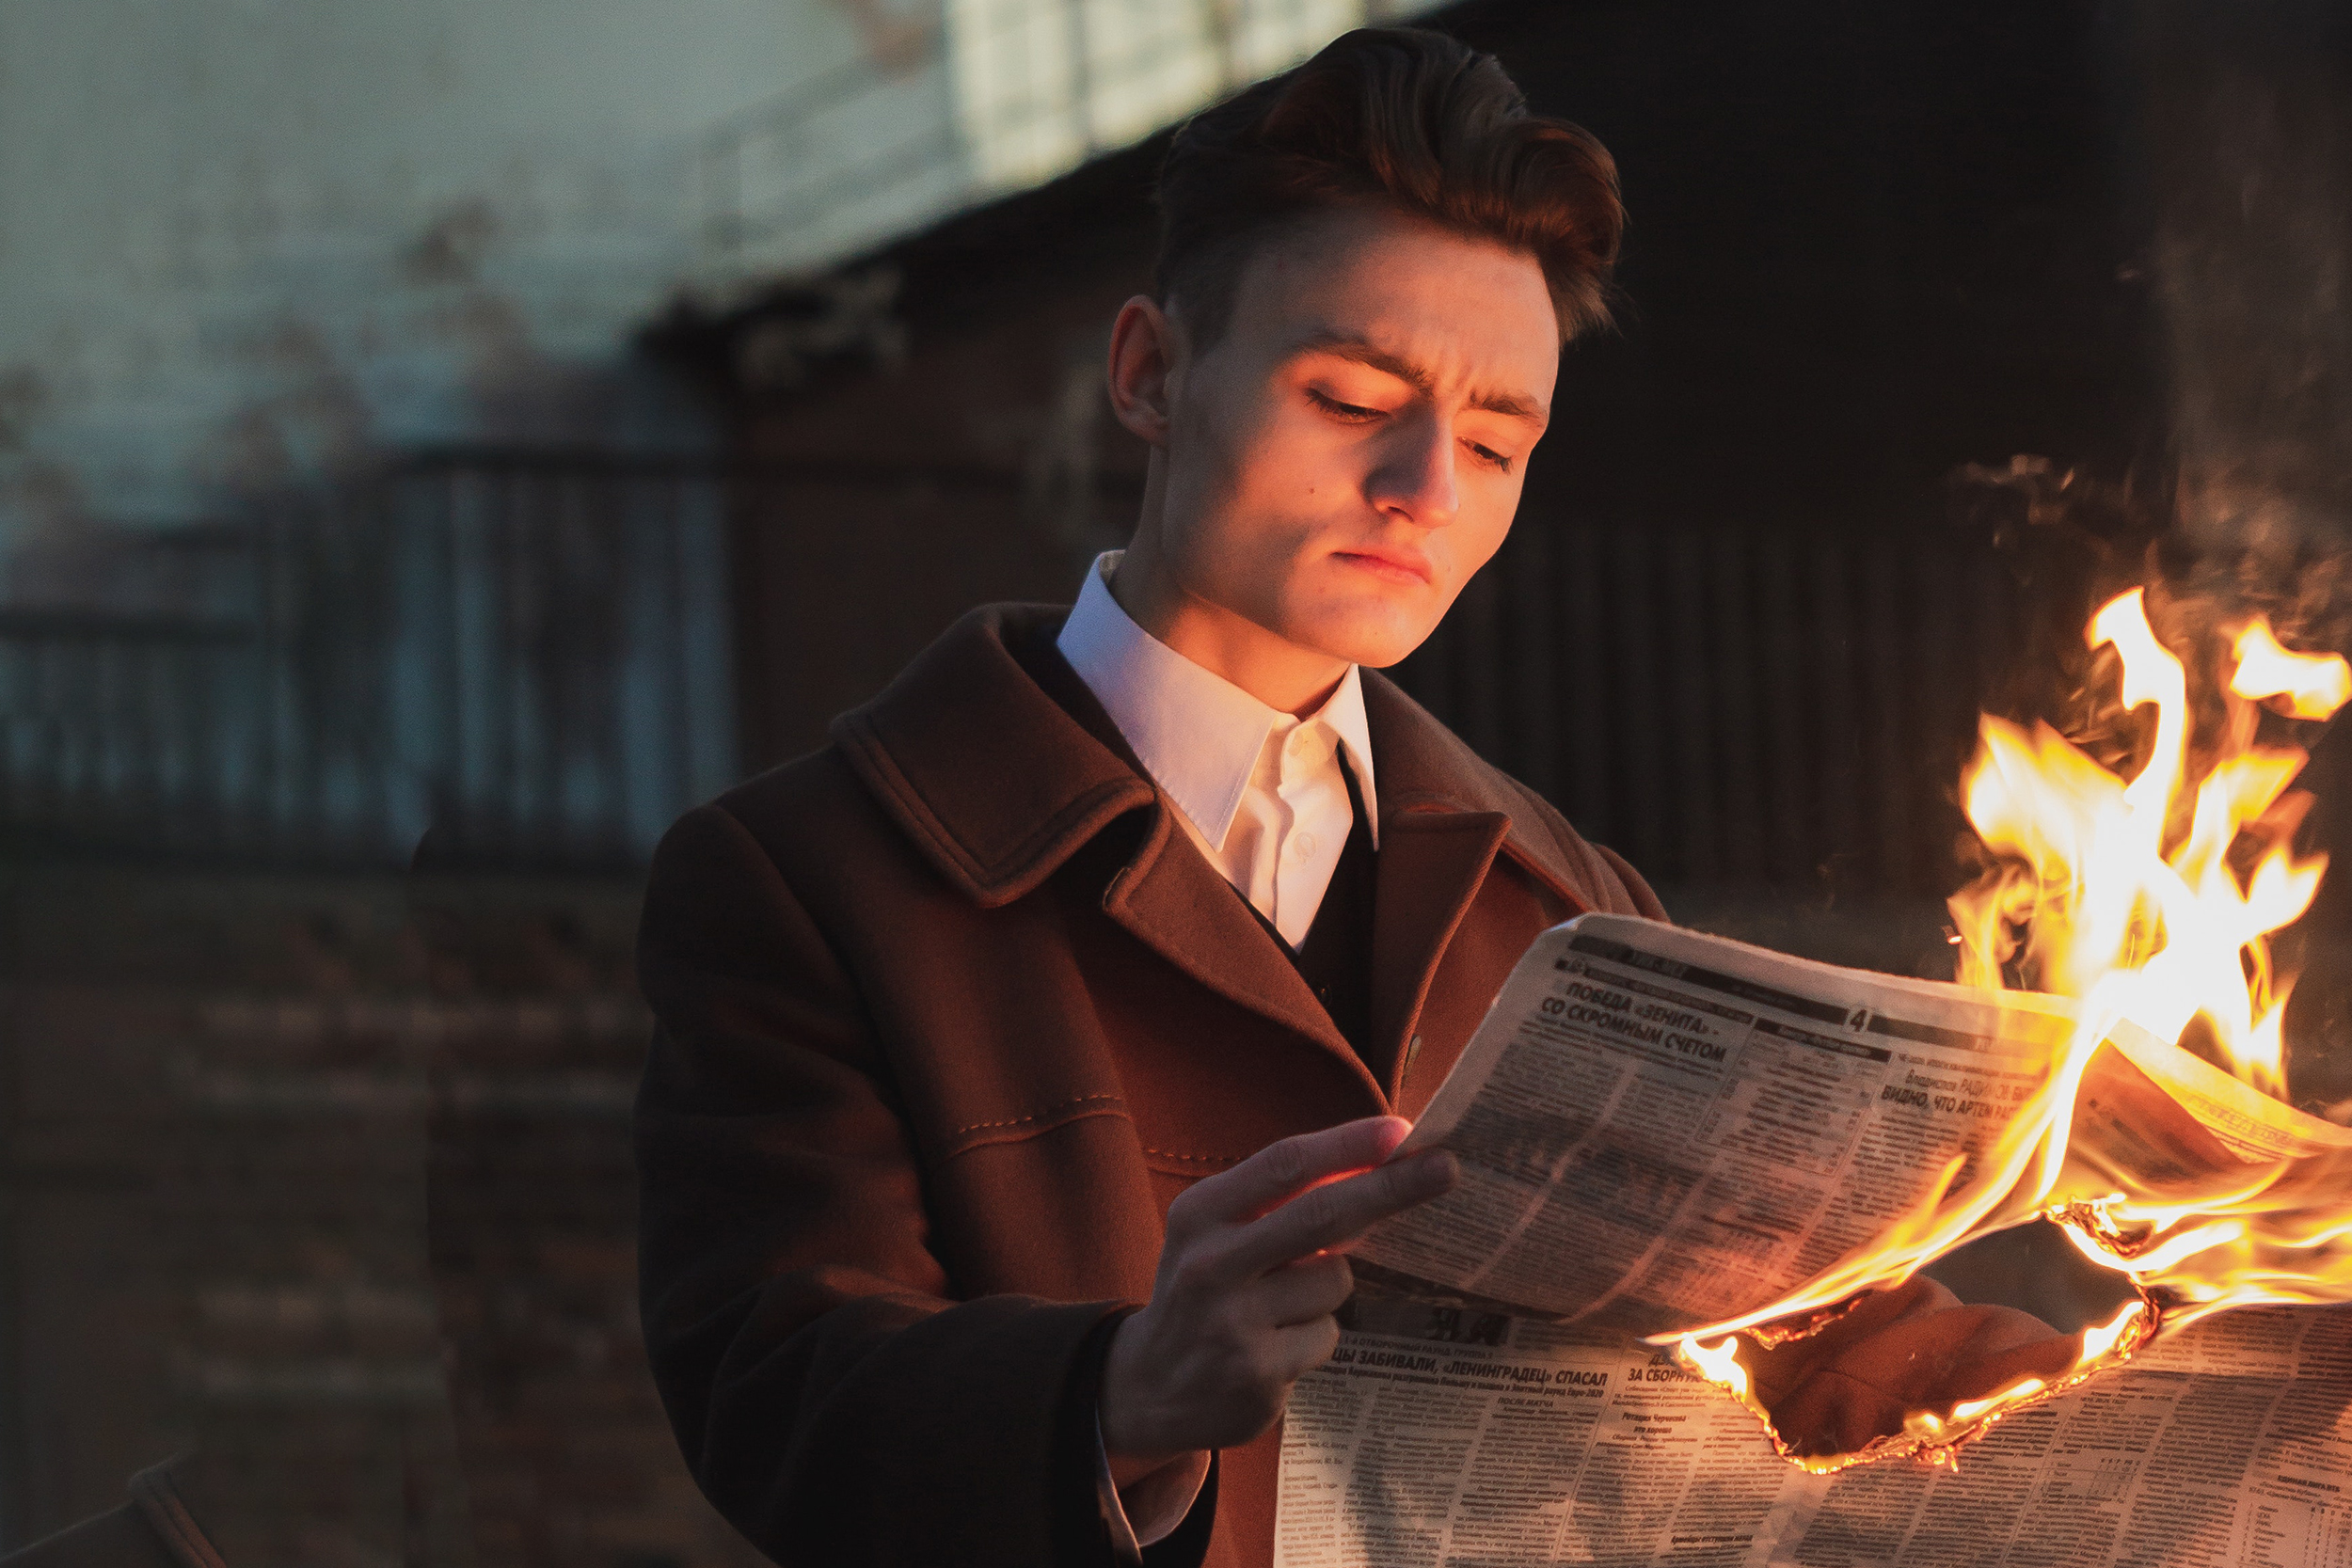 man in brown jacket calmly reading burning newspaper